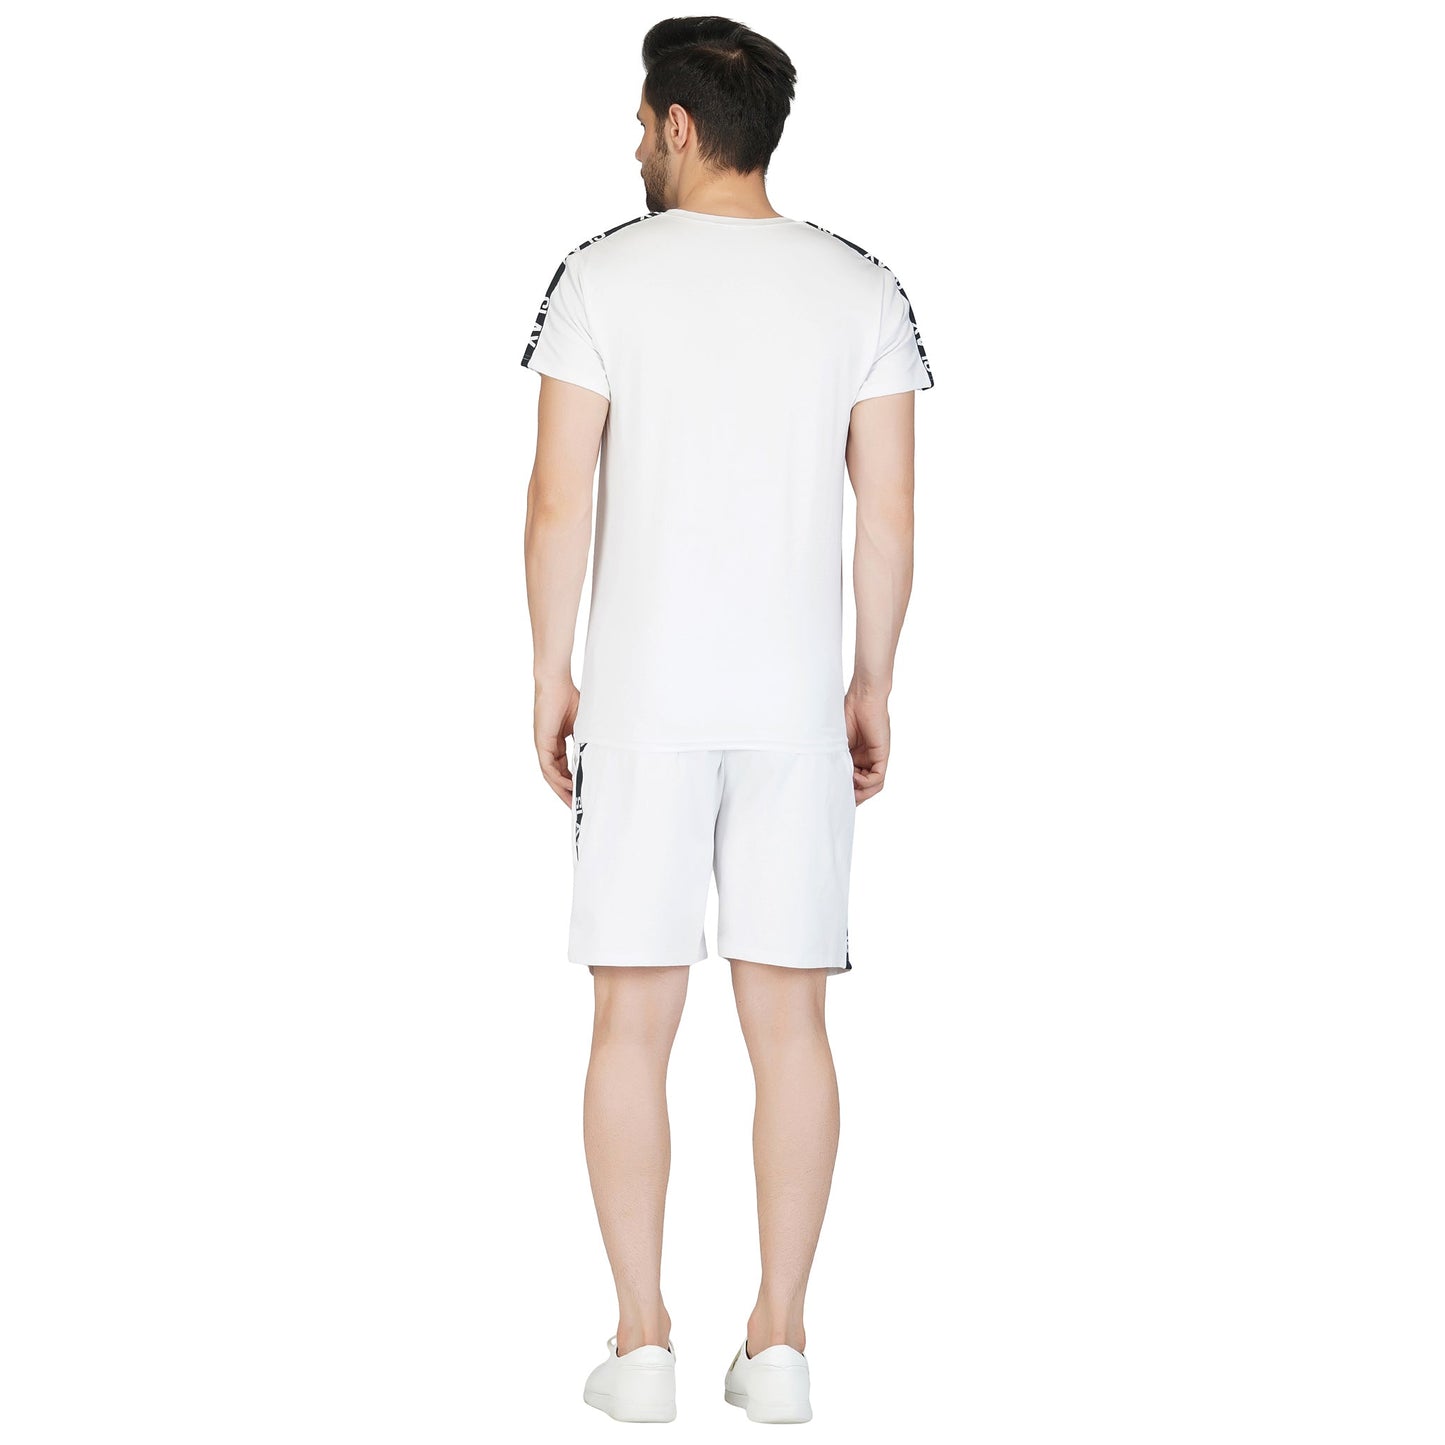 SLAY. Men's White Shorts(4 way Stretch Fabric)